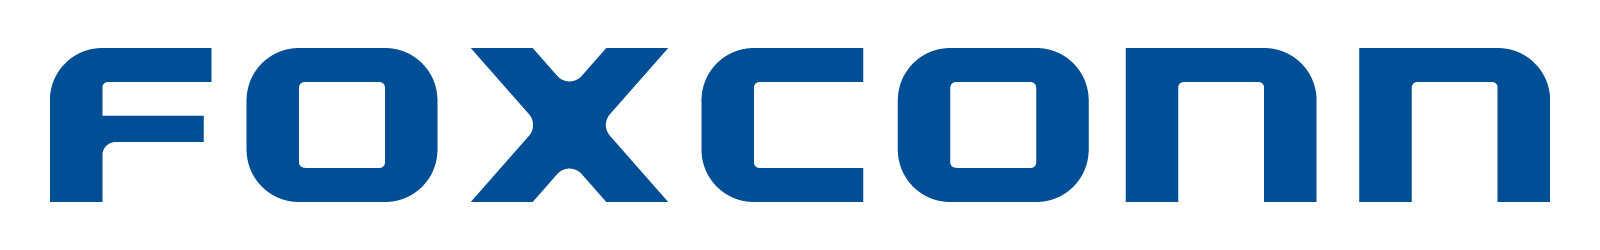 foxconn-logo-blue